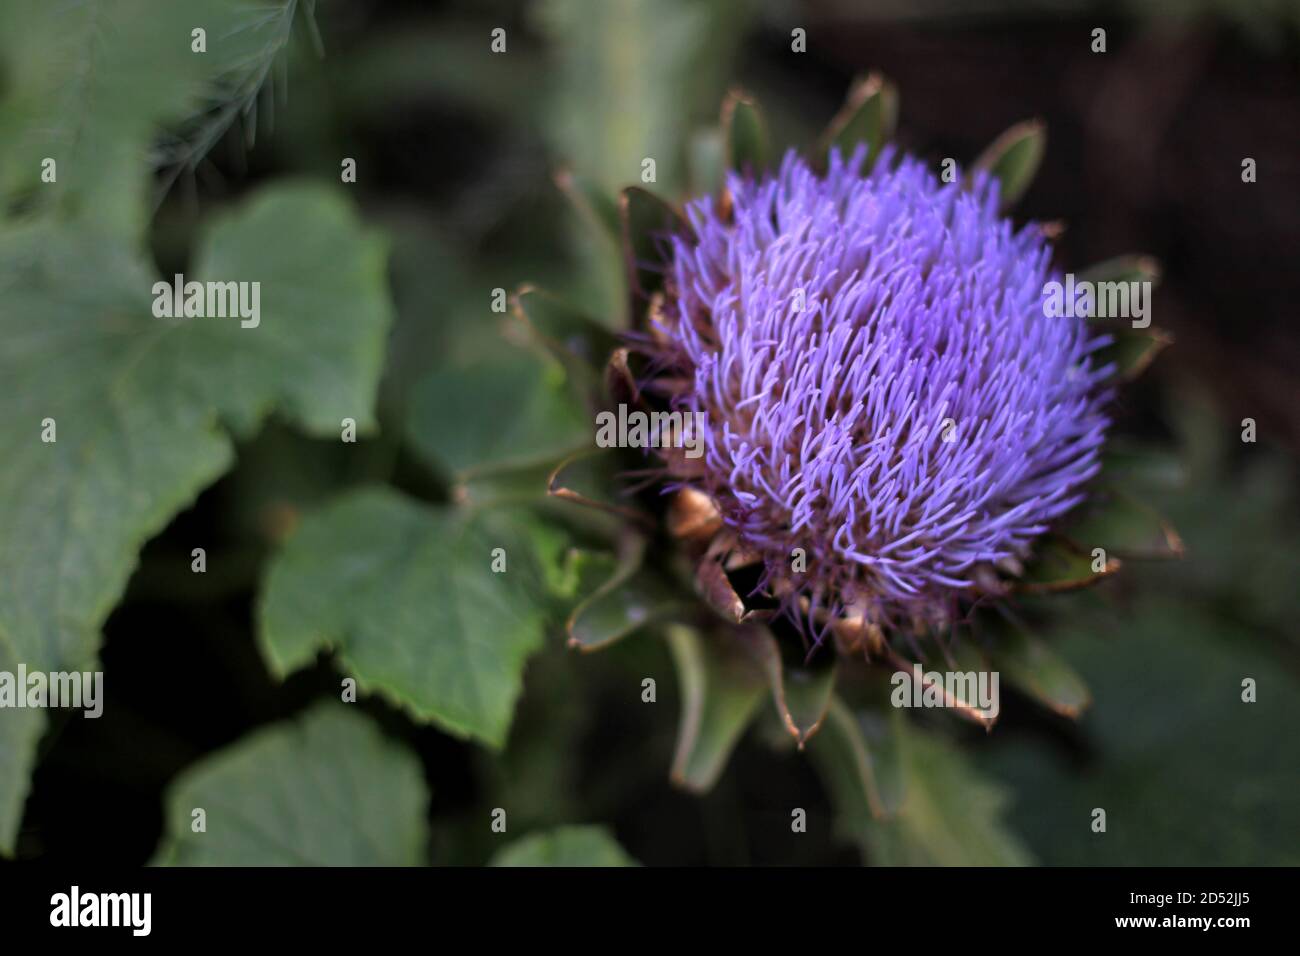 Closeup view of purple artichoke flower Stock Photo